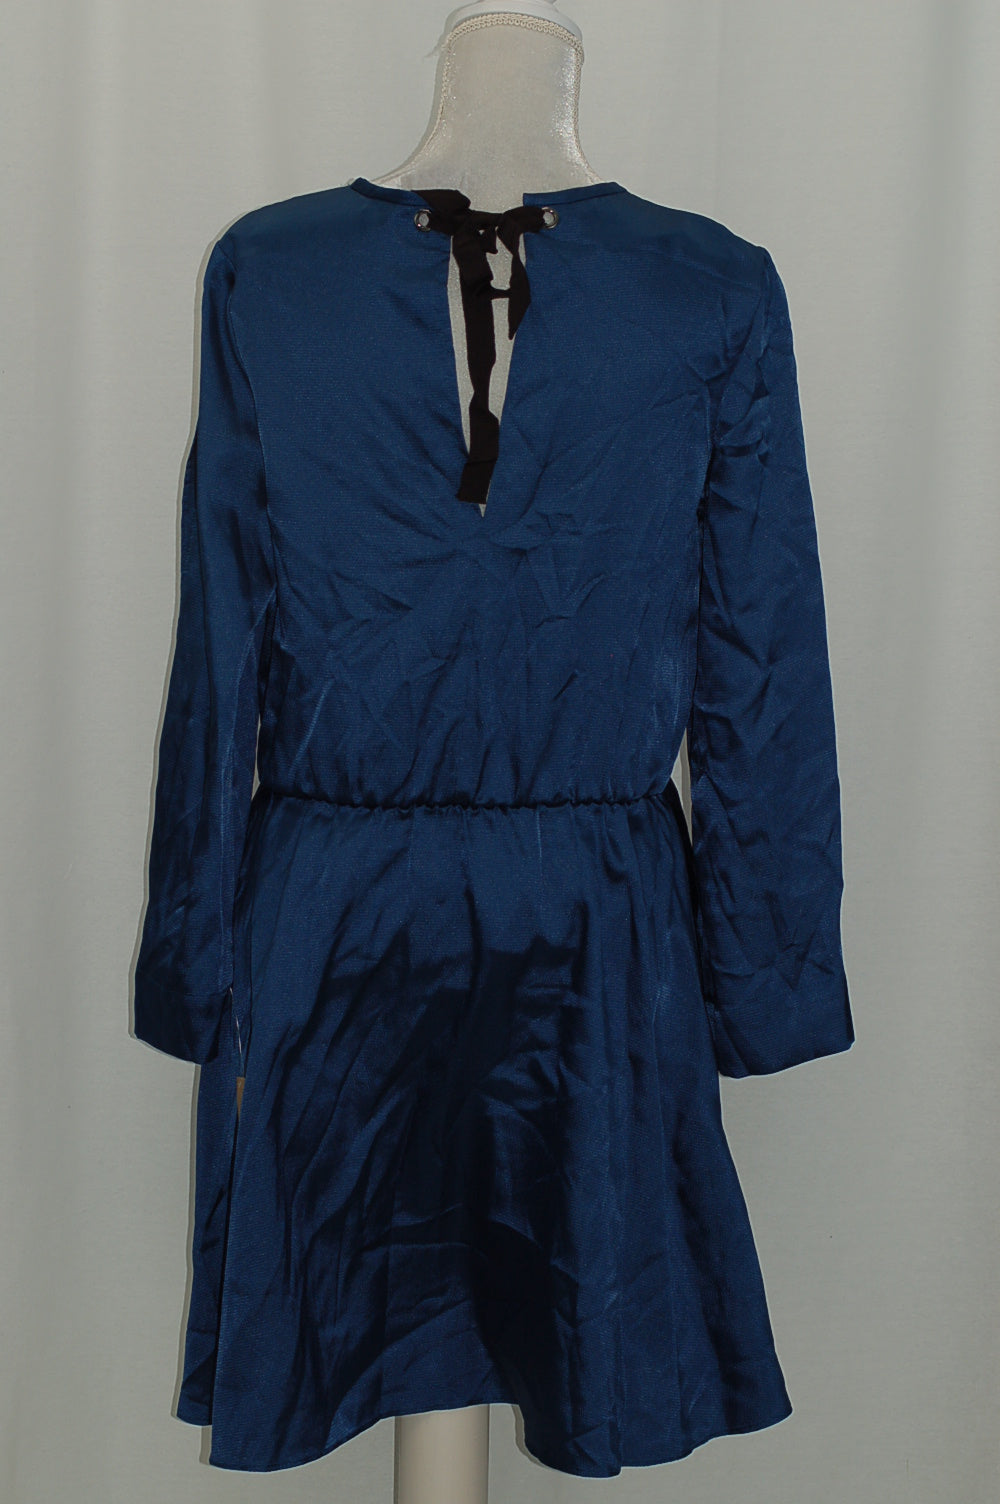 RACHEL Rachel Roy Julia Split-Sleeve Blouson Dress Teal Blue M